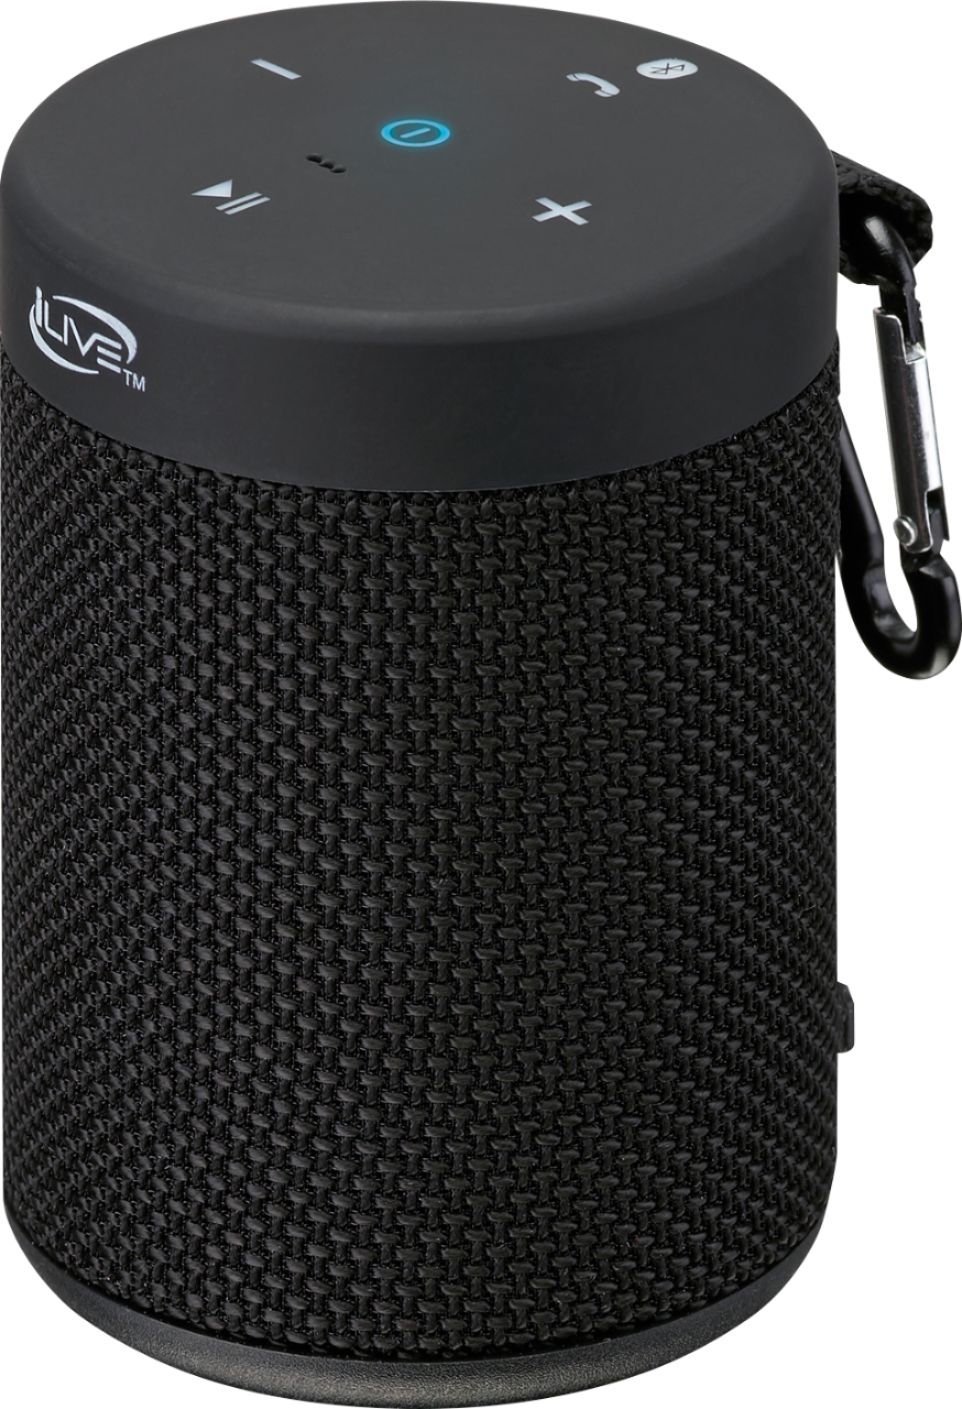 ilive bluetooth waterproof speaker